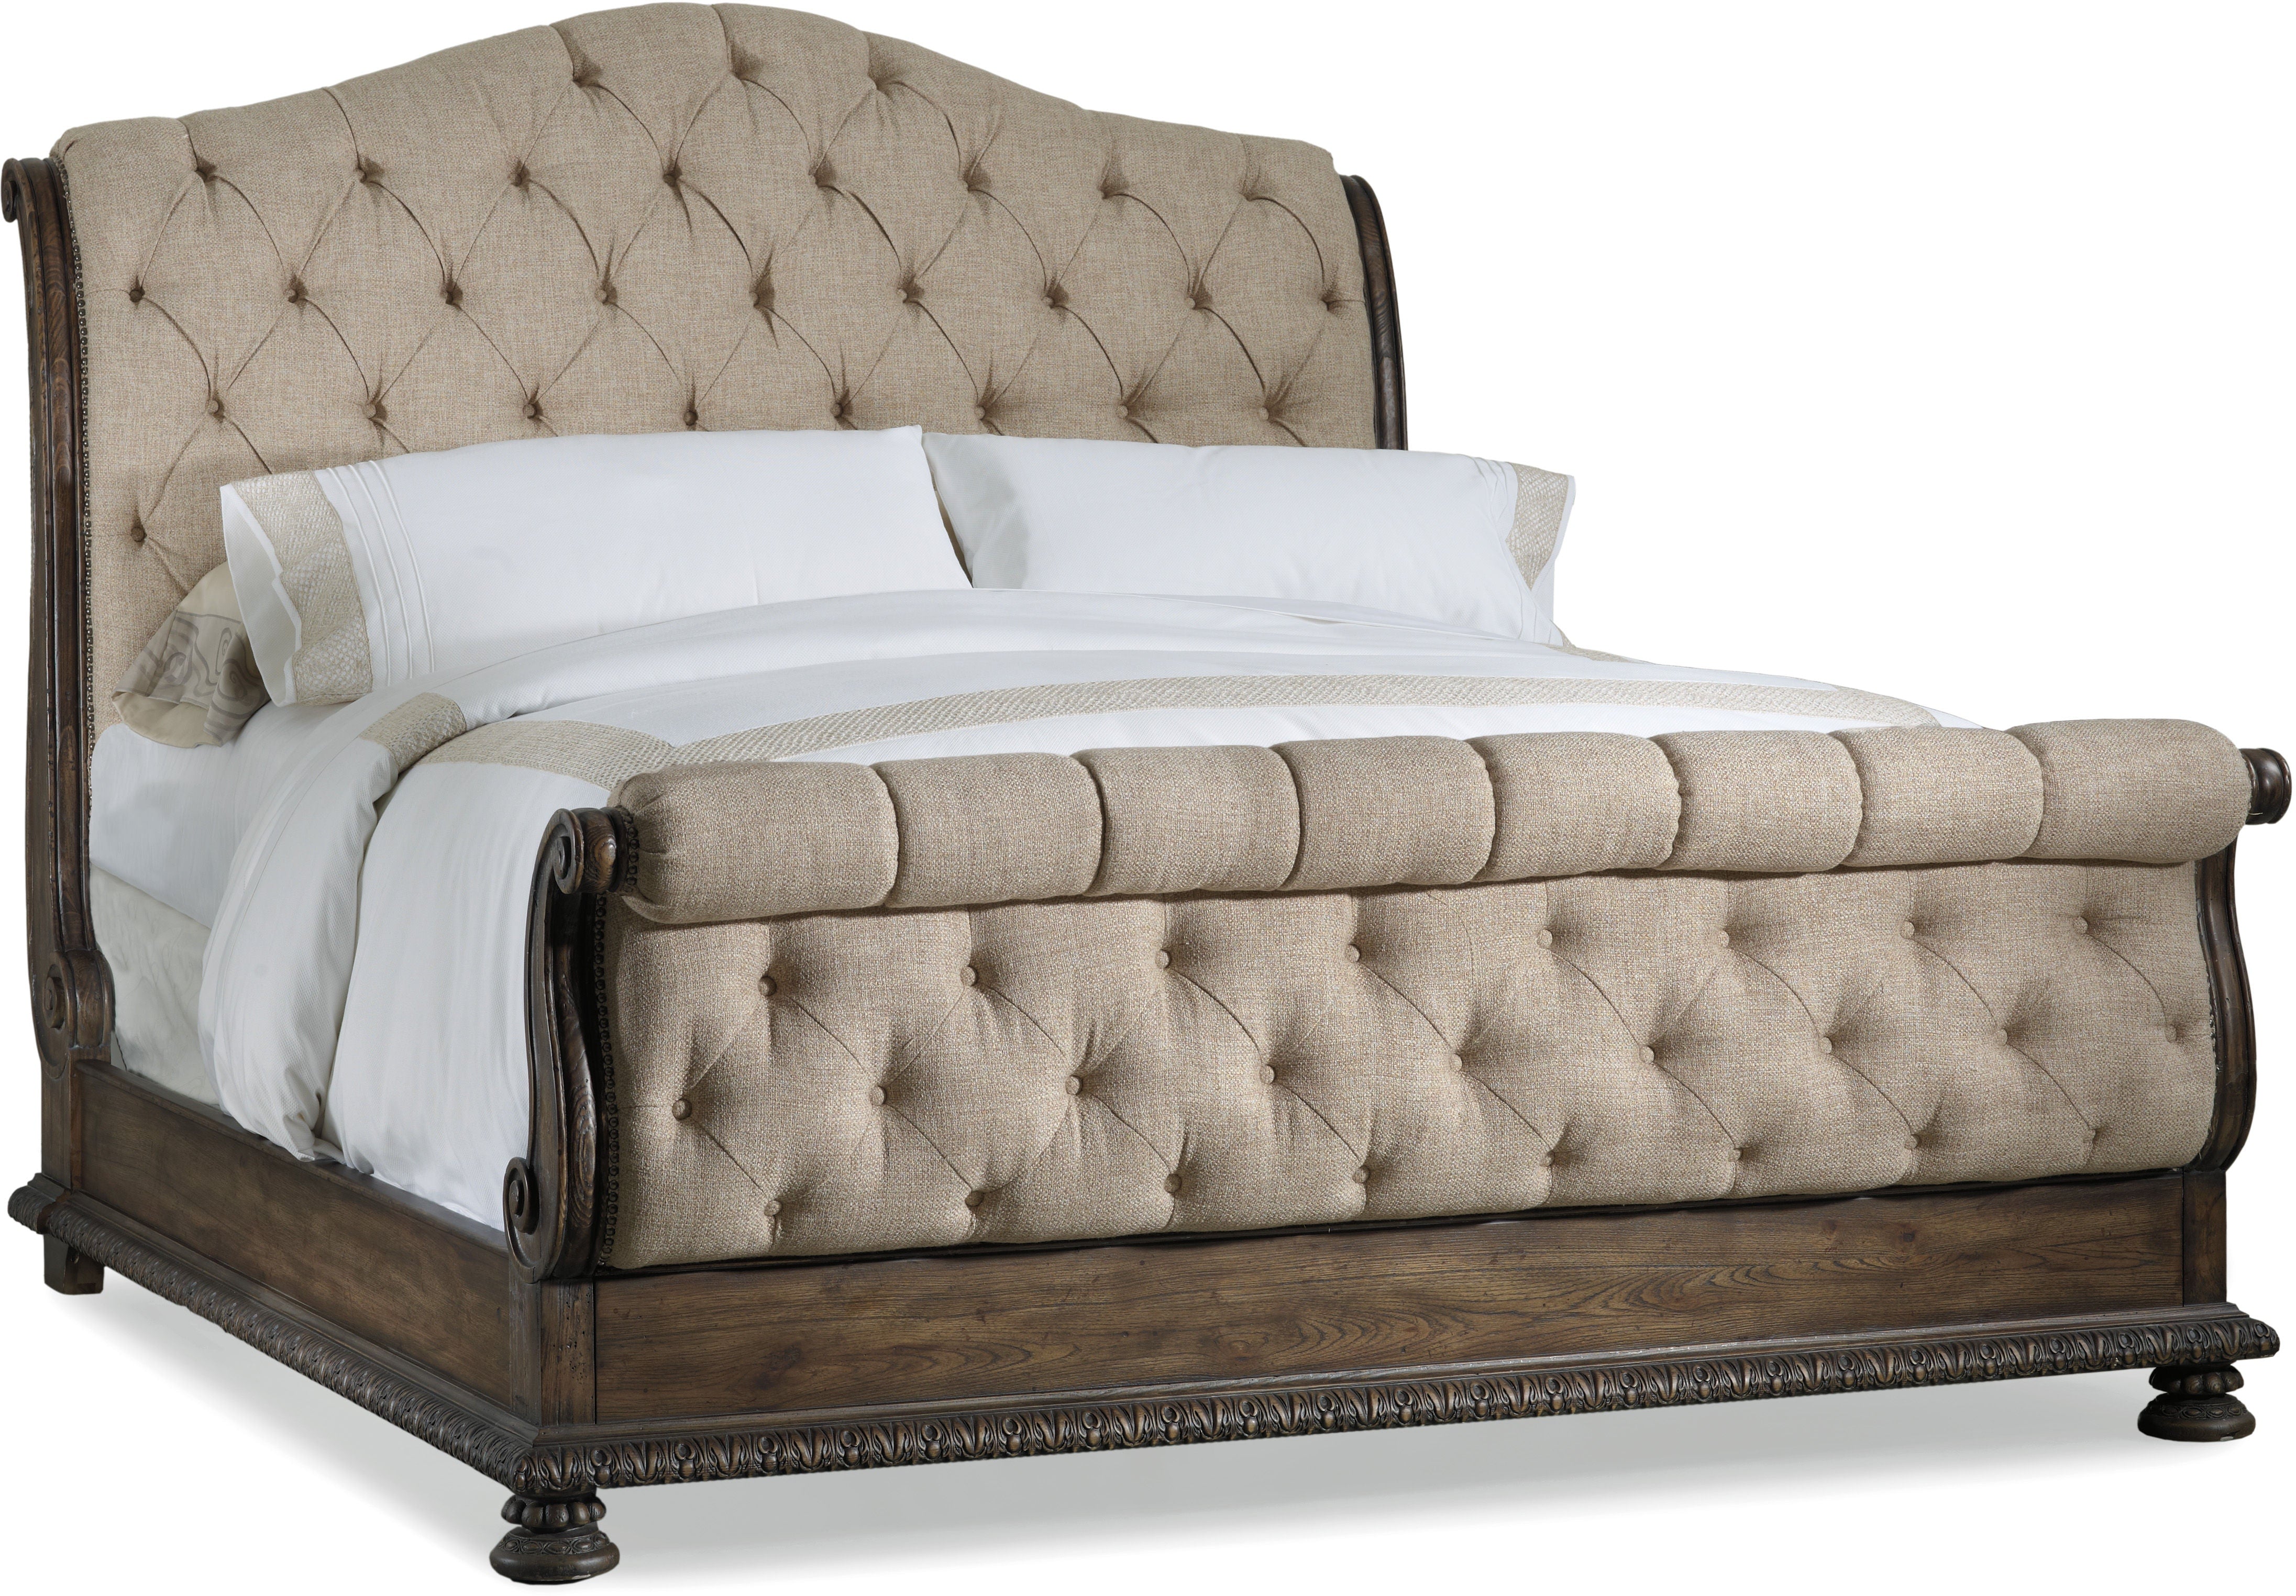 Hooker Furniture Bedroom Rhapsody Tufted Bed